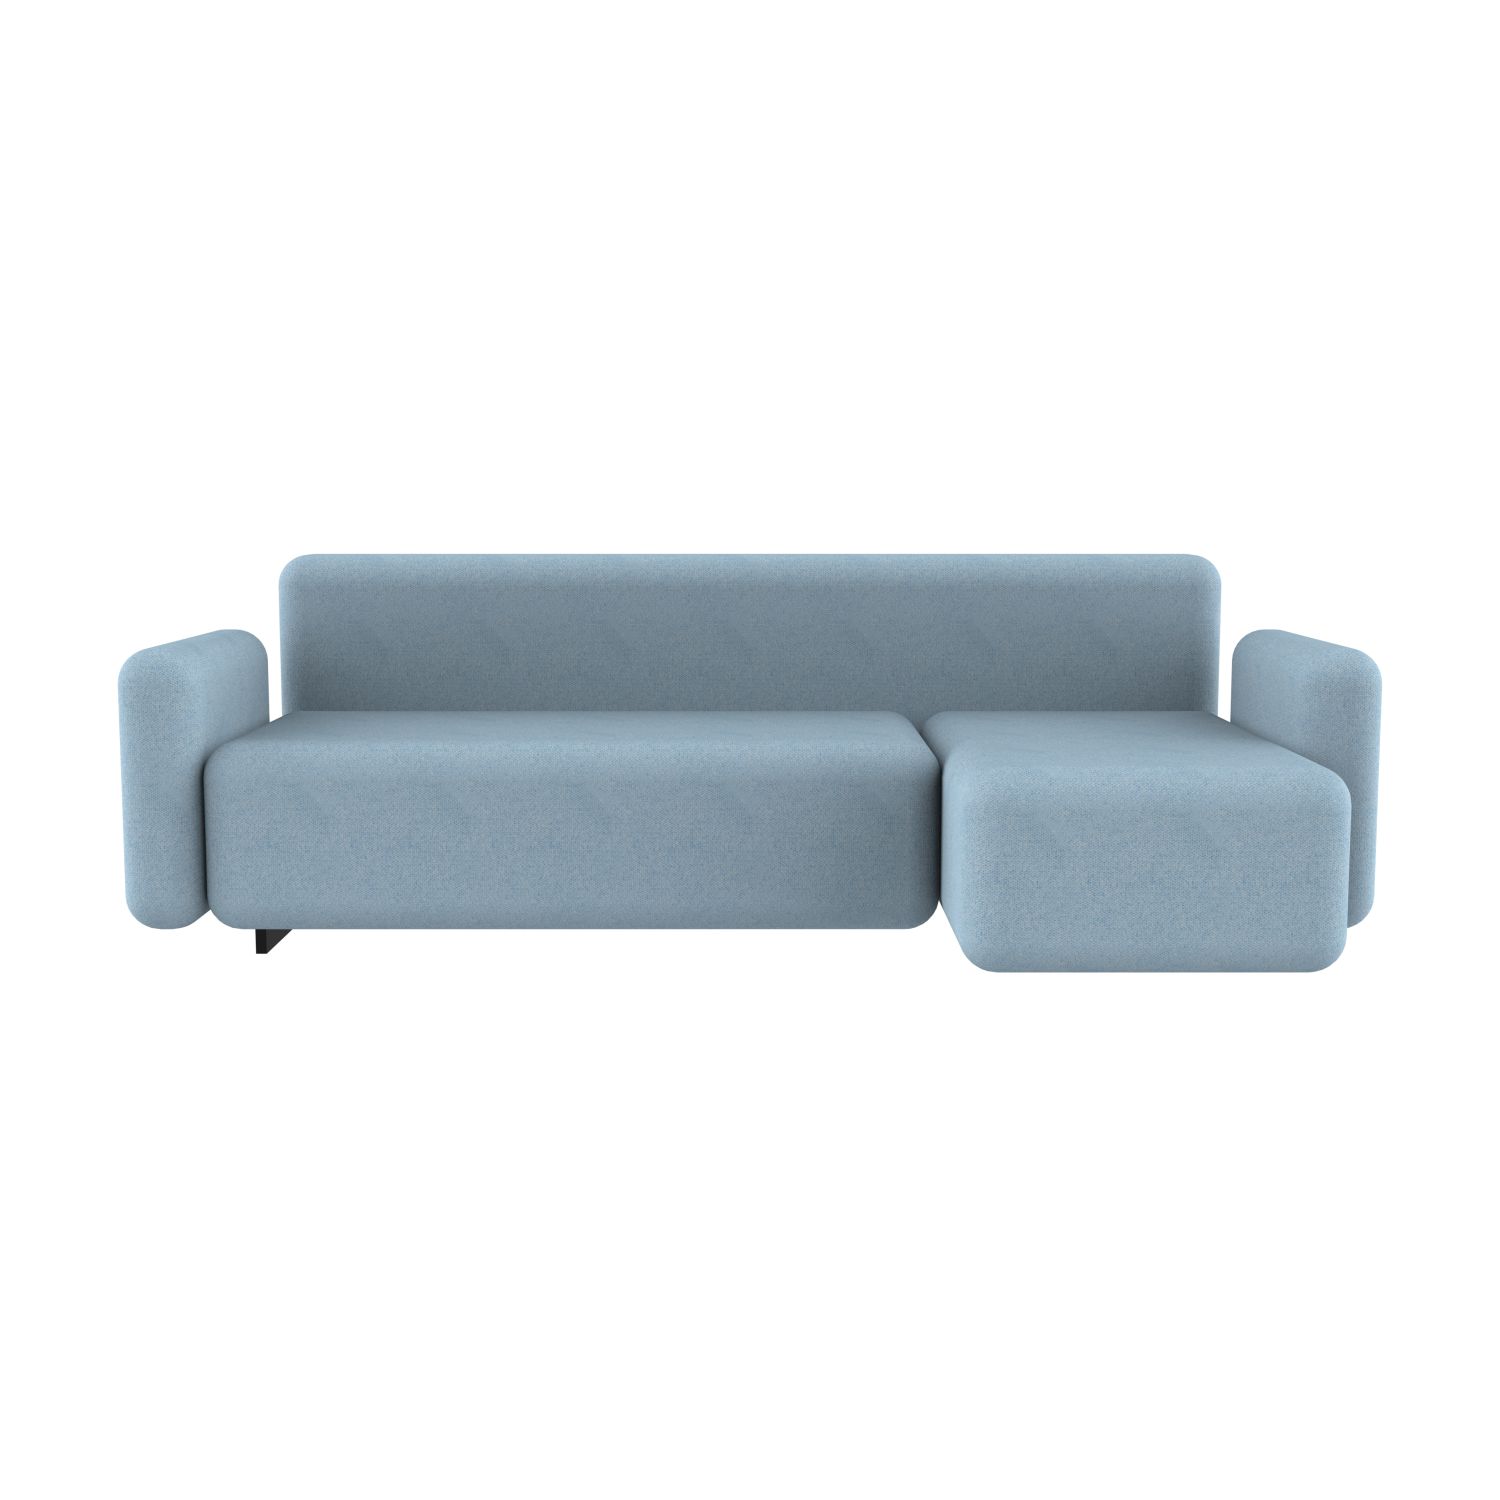 lensvelt fabio novembre balance lounger right with armrest moss pastel blue 40 black ral9005